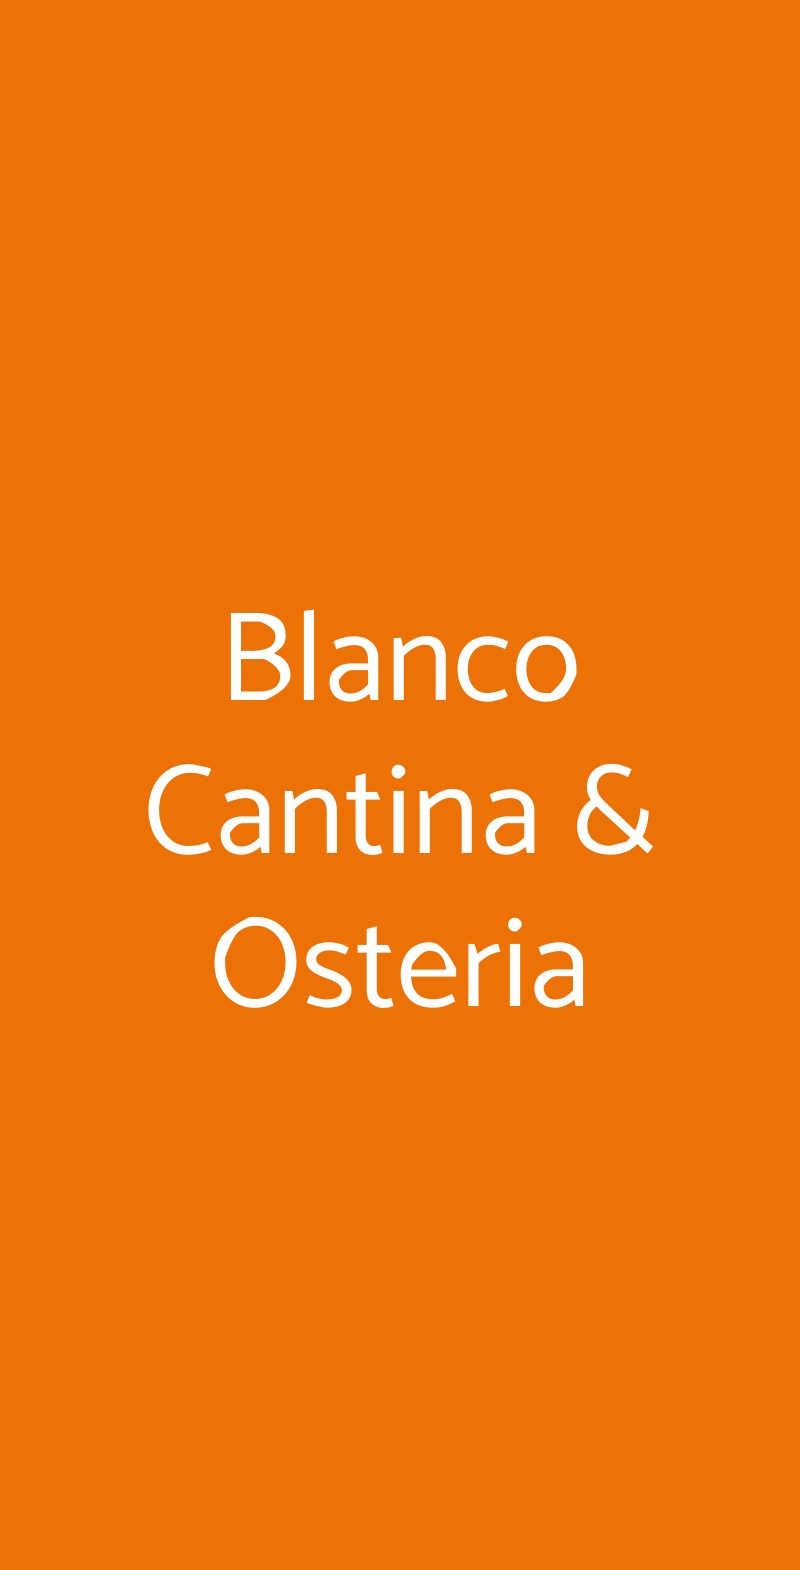 Blanco Cantina & Osteria Palermo menù 1 pagina